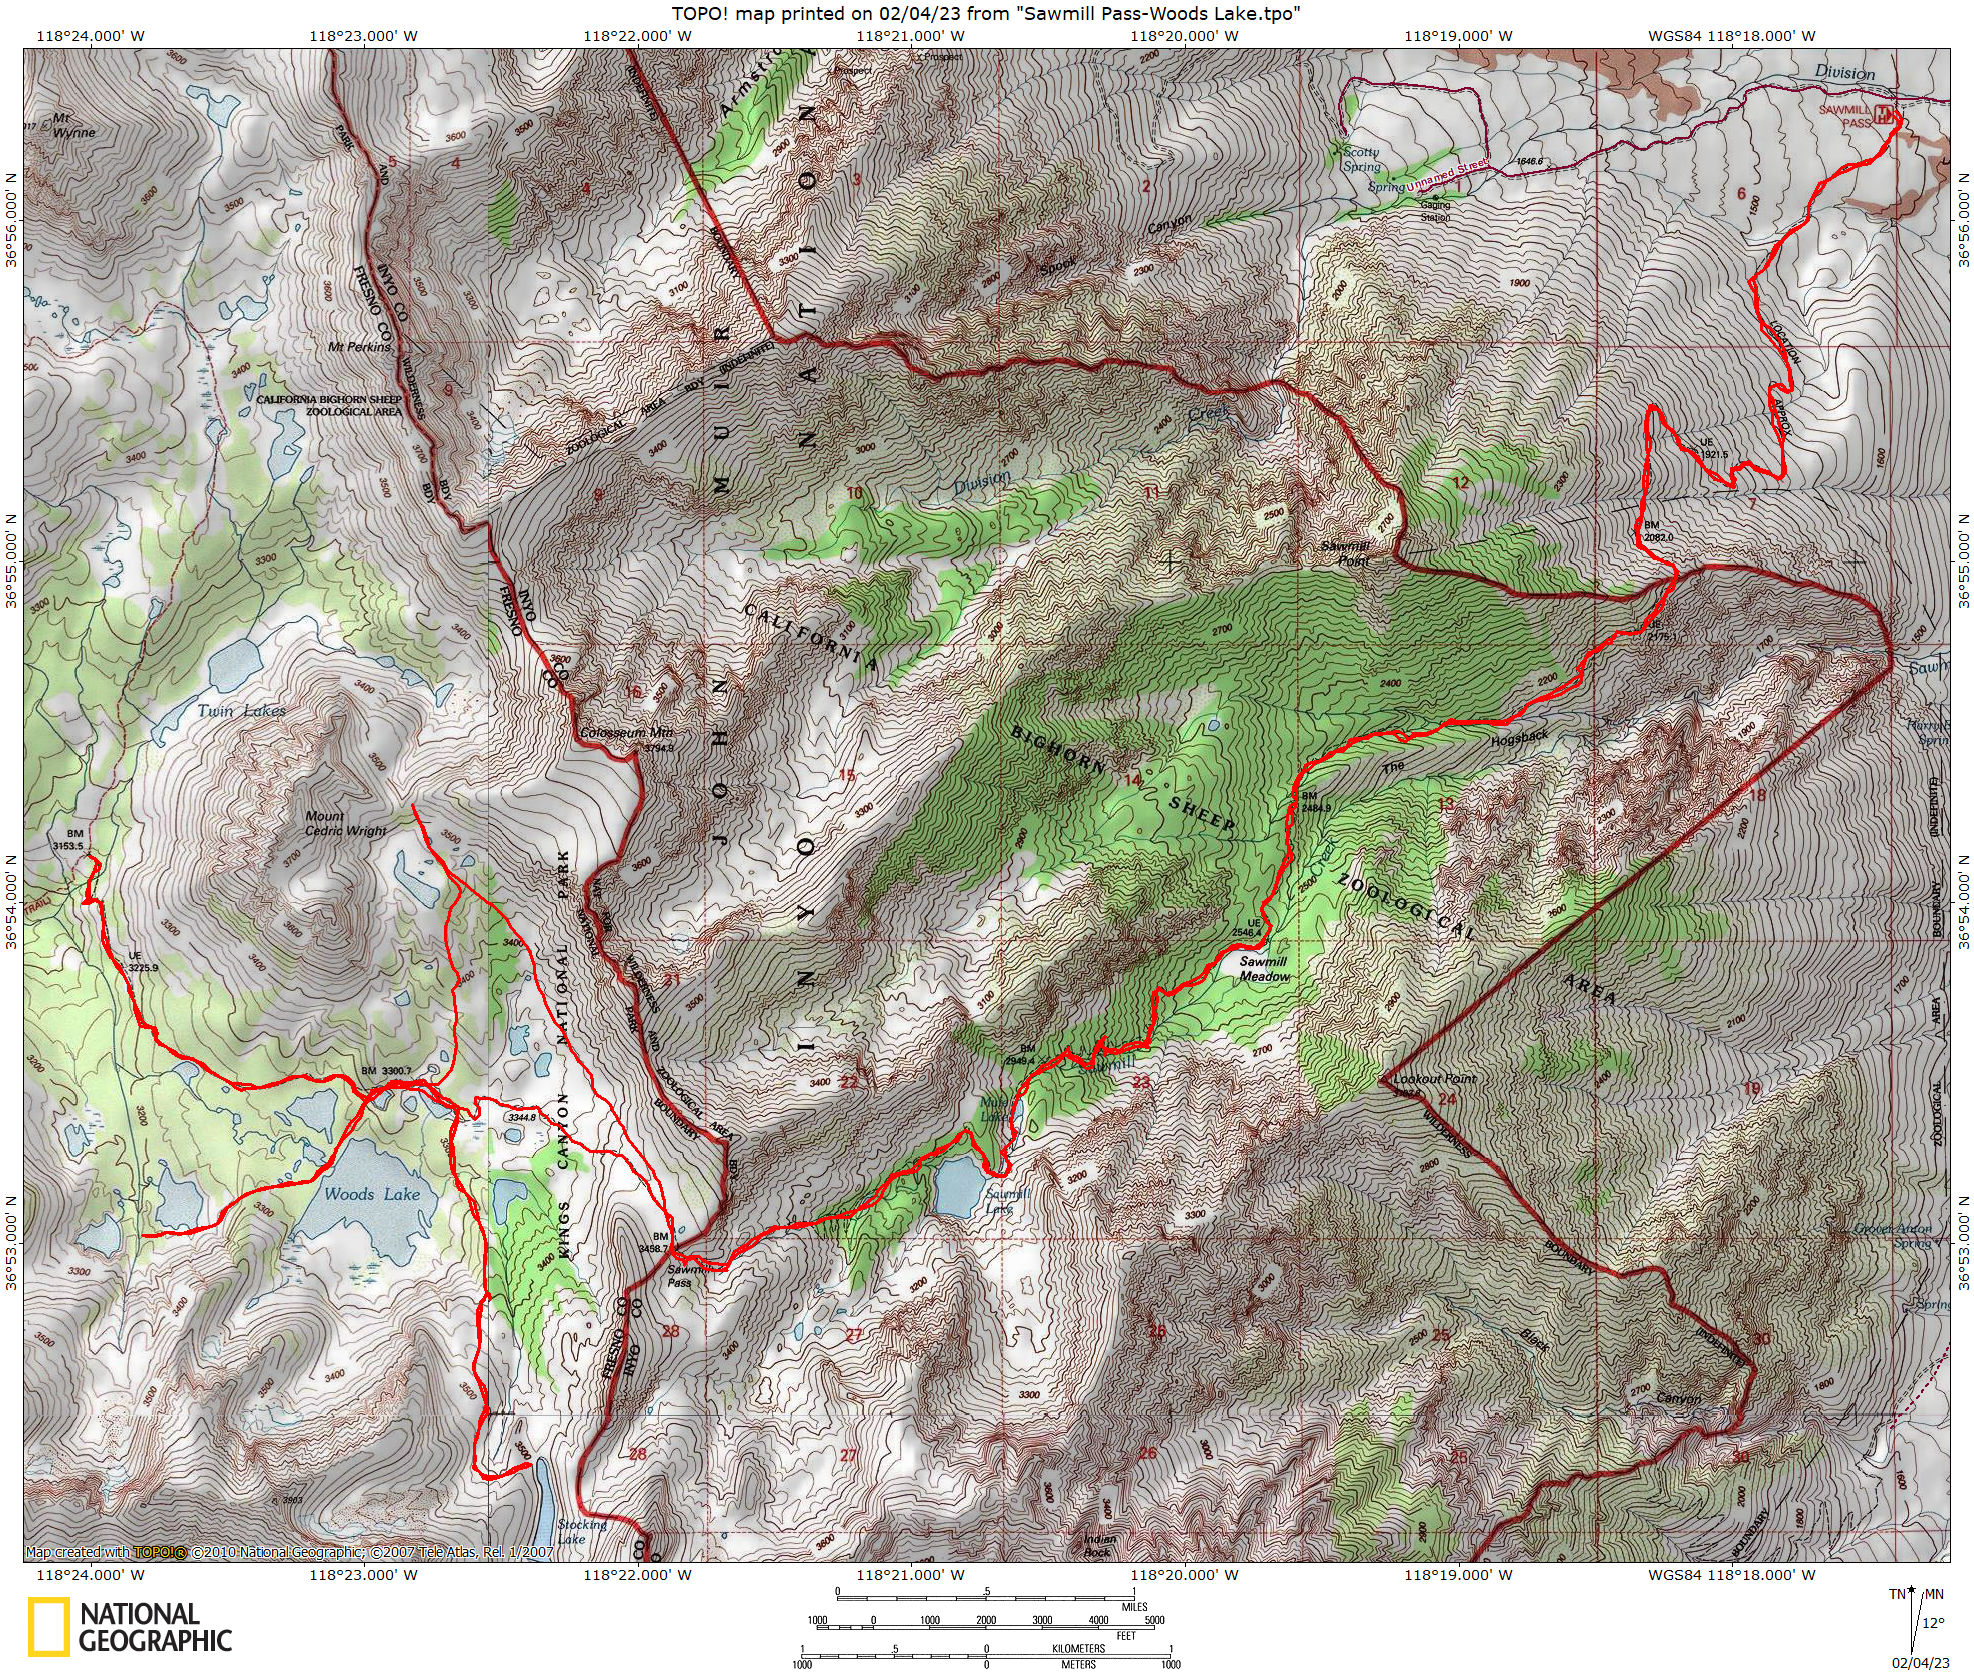 Sawmill Pass-Woods Lake Area 1972 and 1975 map